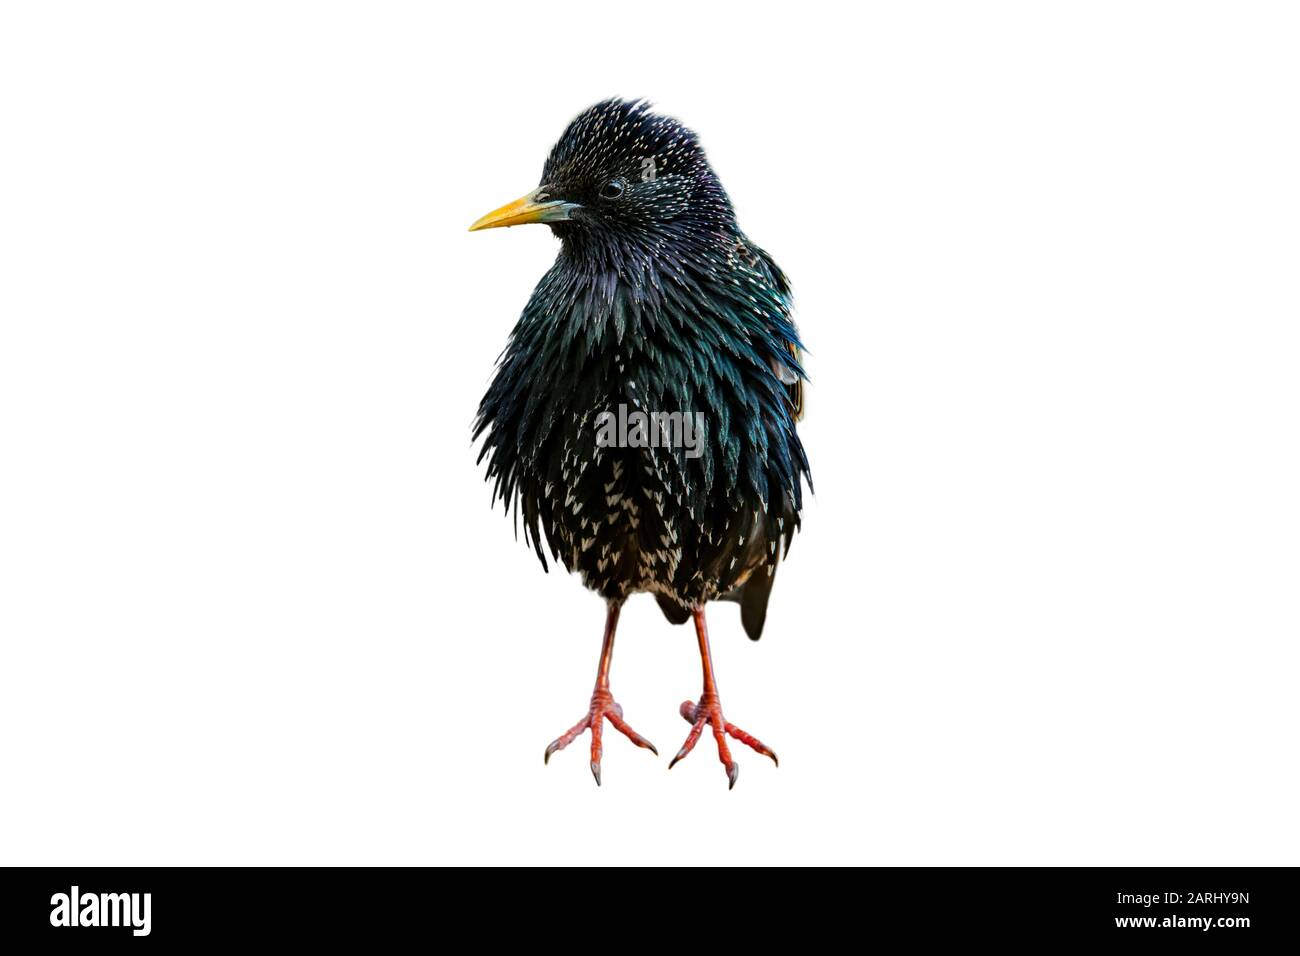 Common starling / European starling (Sturnus vulgaris) against white background Stock Photo